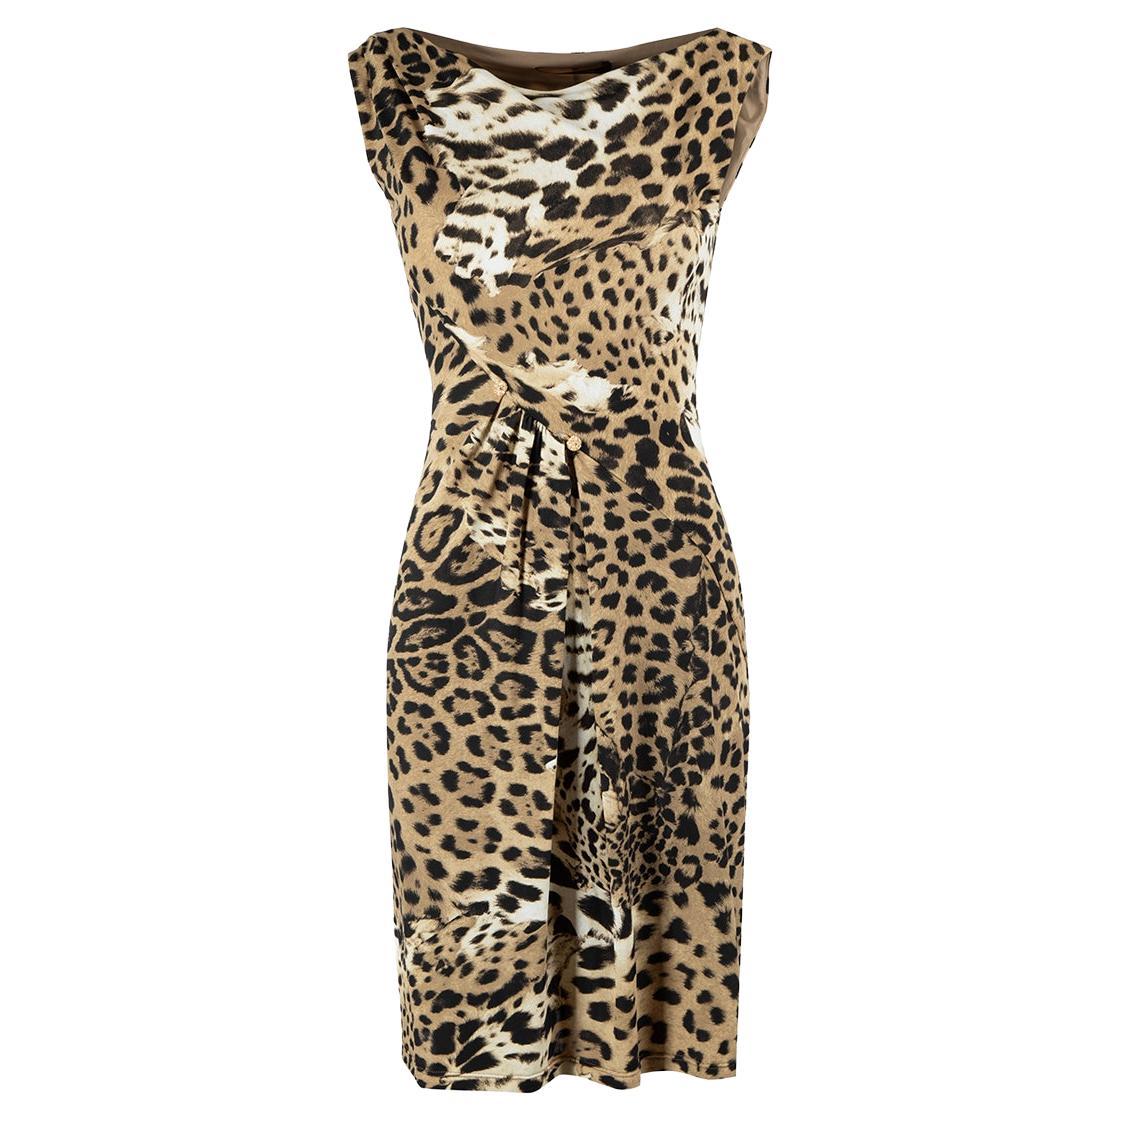 Brown Leopard Print Sleeveless Knee Length Dress Size S